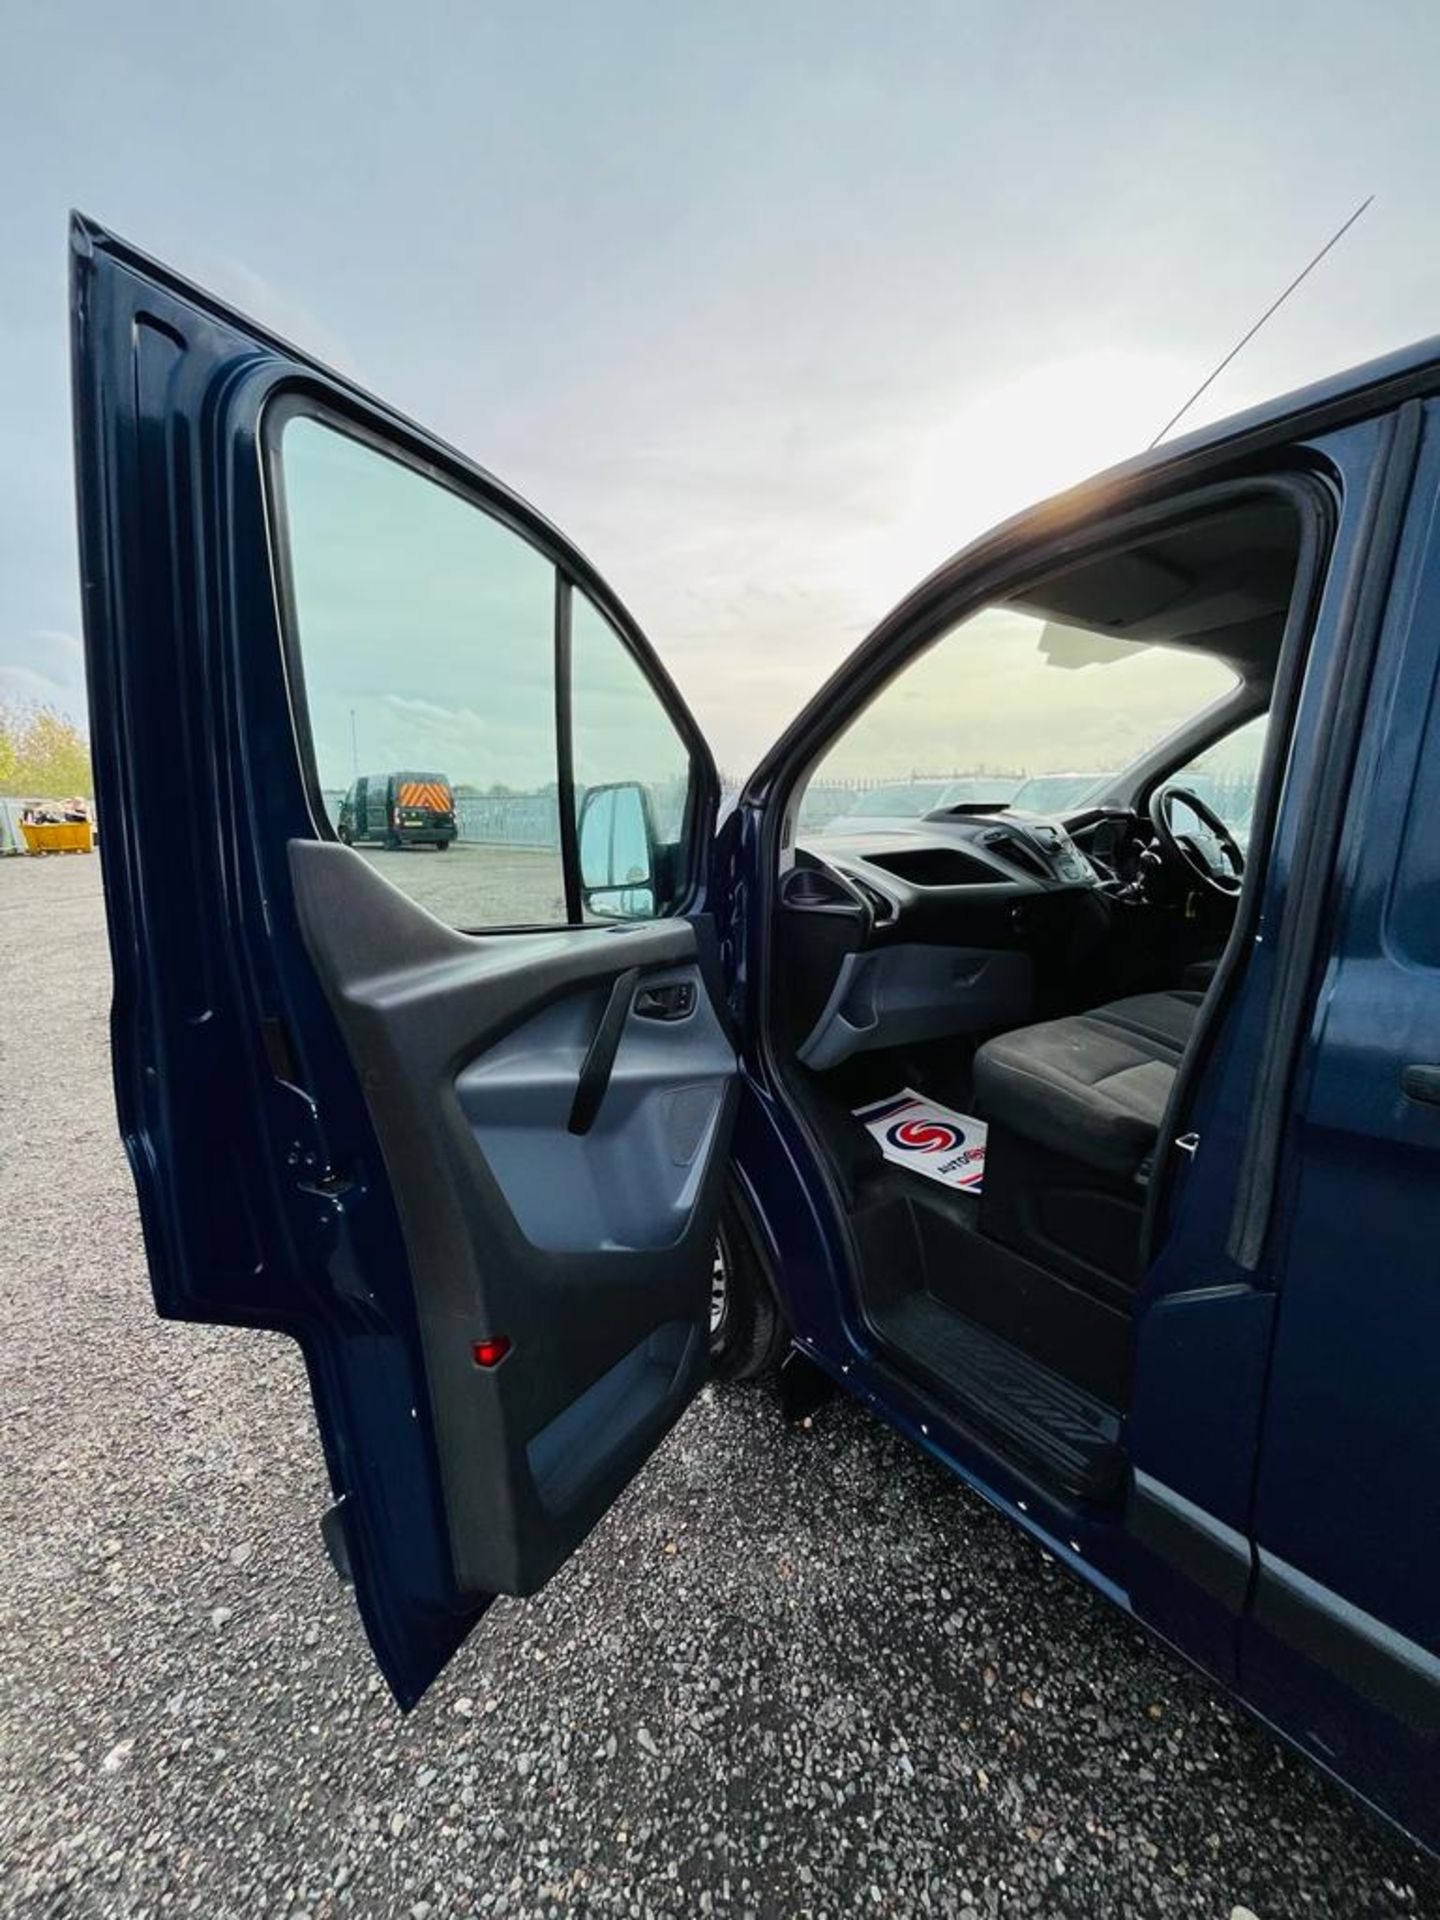 ** ON SALE ** Ford transit Custom 2.2 TDCI Eco Tech 100 270 2015 '65 Reg' - Panel Van - Image 19 of 22